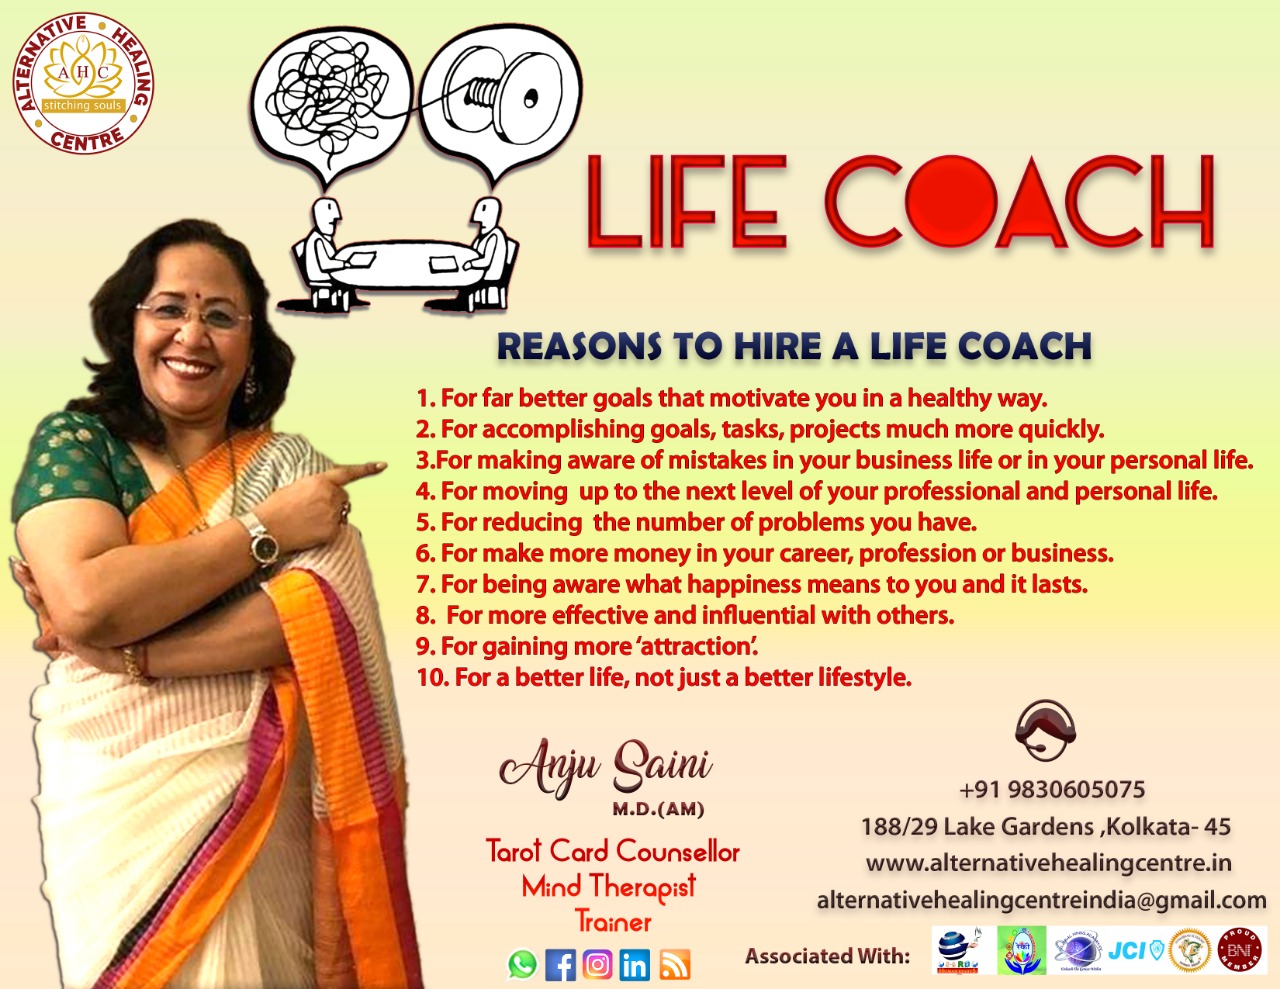 Life Coaching Sessions by Anju Saini - Perth